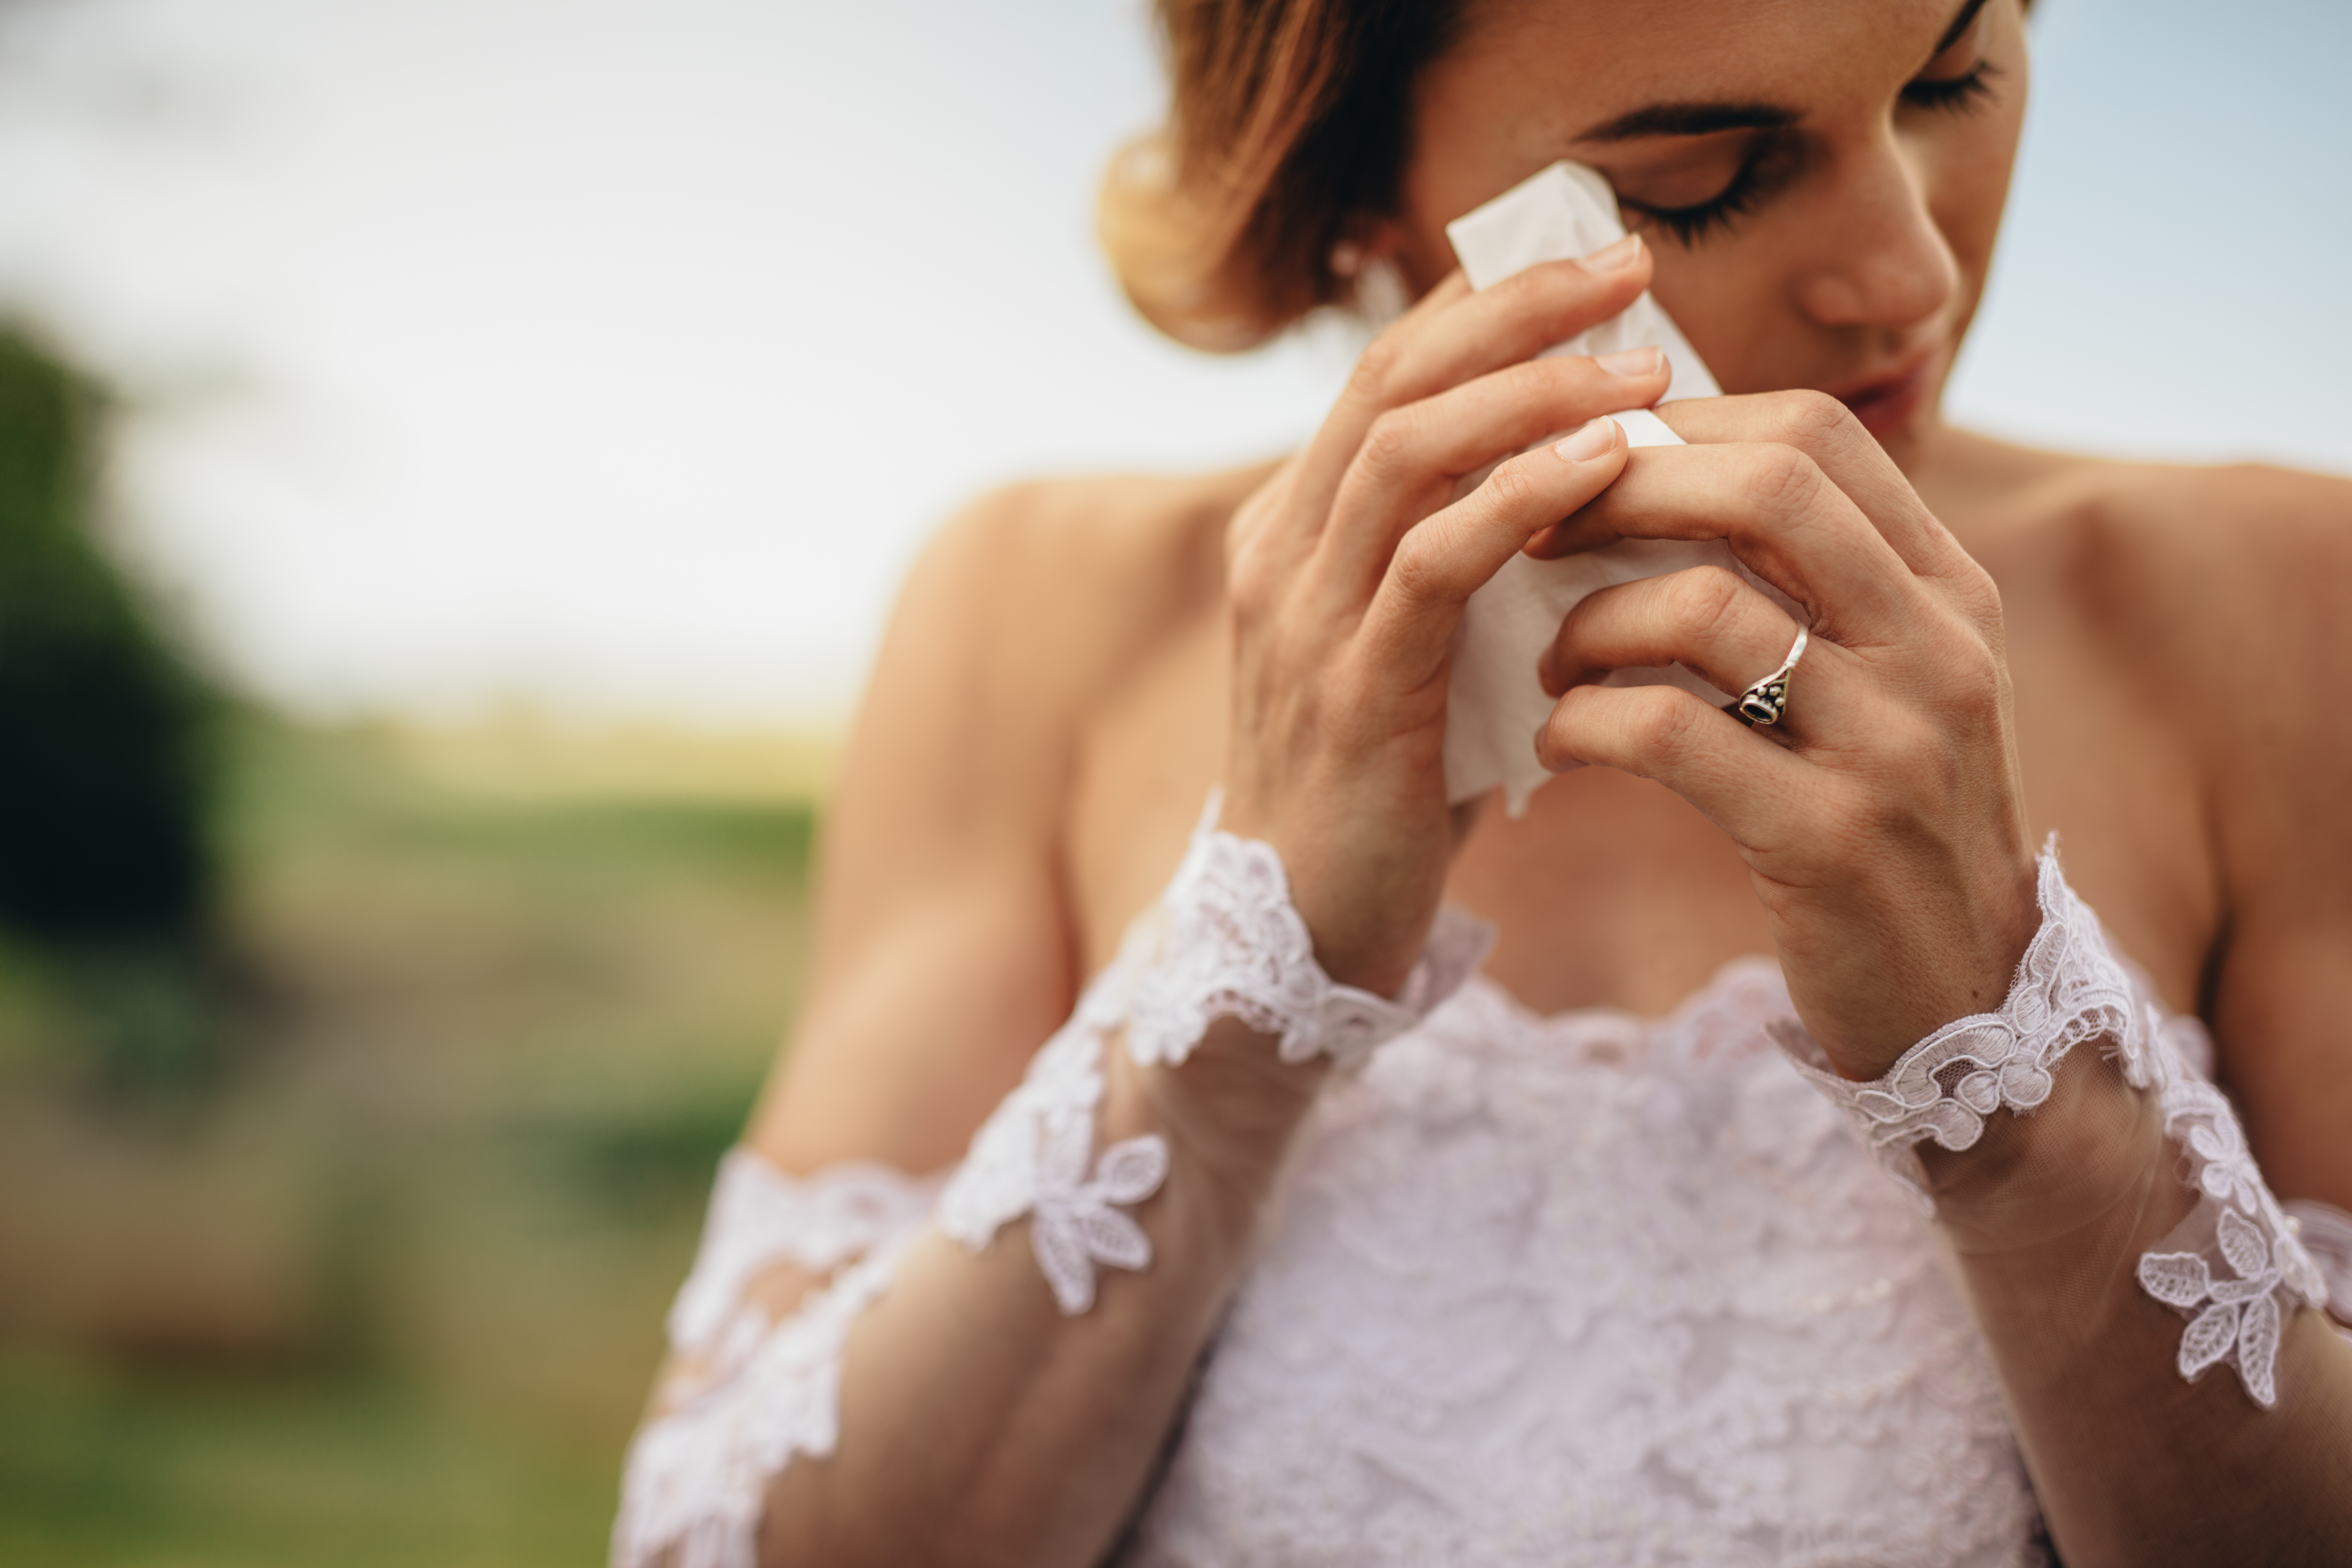 Beautiful bride in white dress | Source: Shutterstock